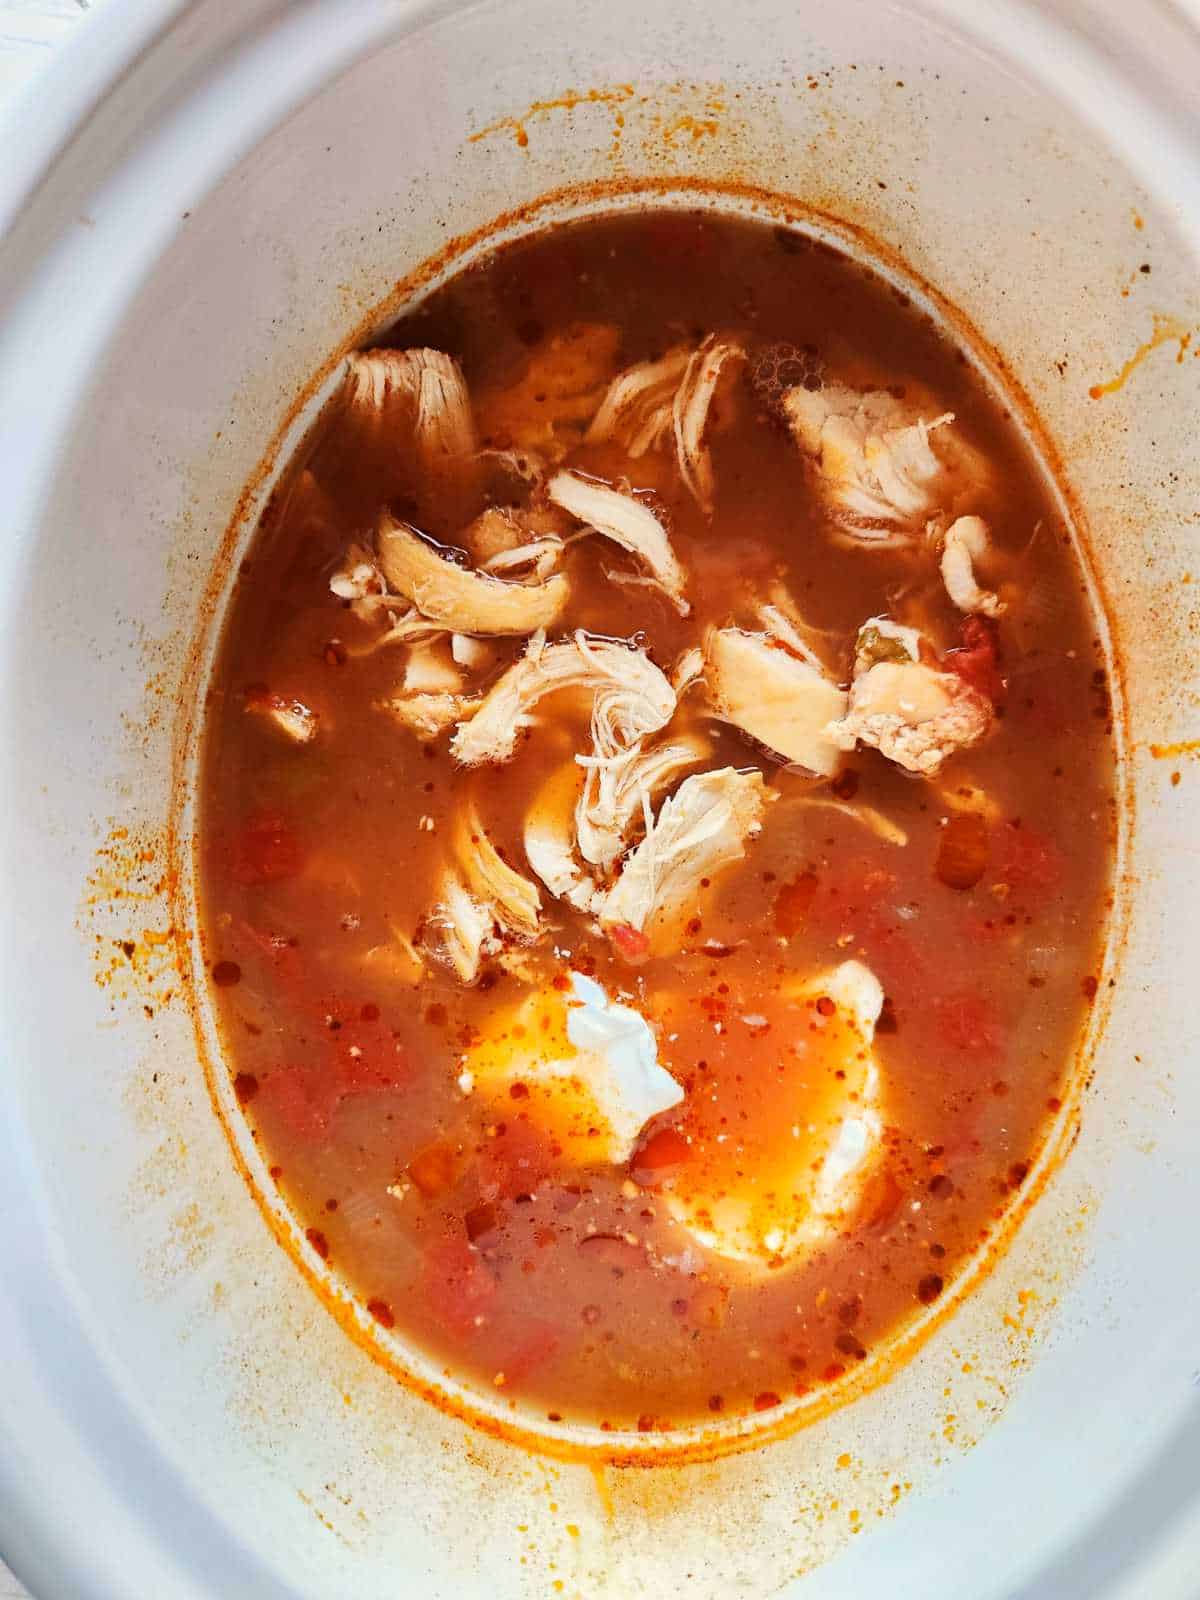 shredded chicken in sauce in a crockpot.